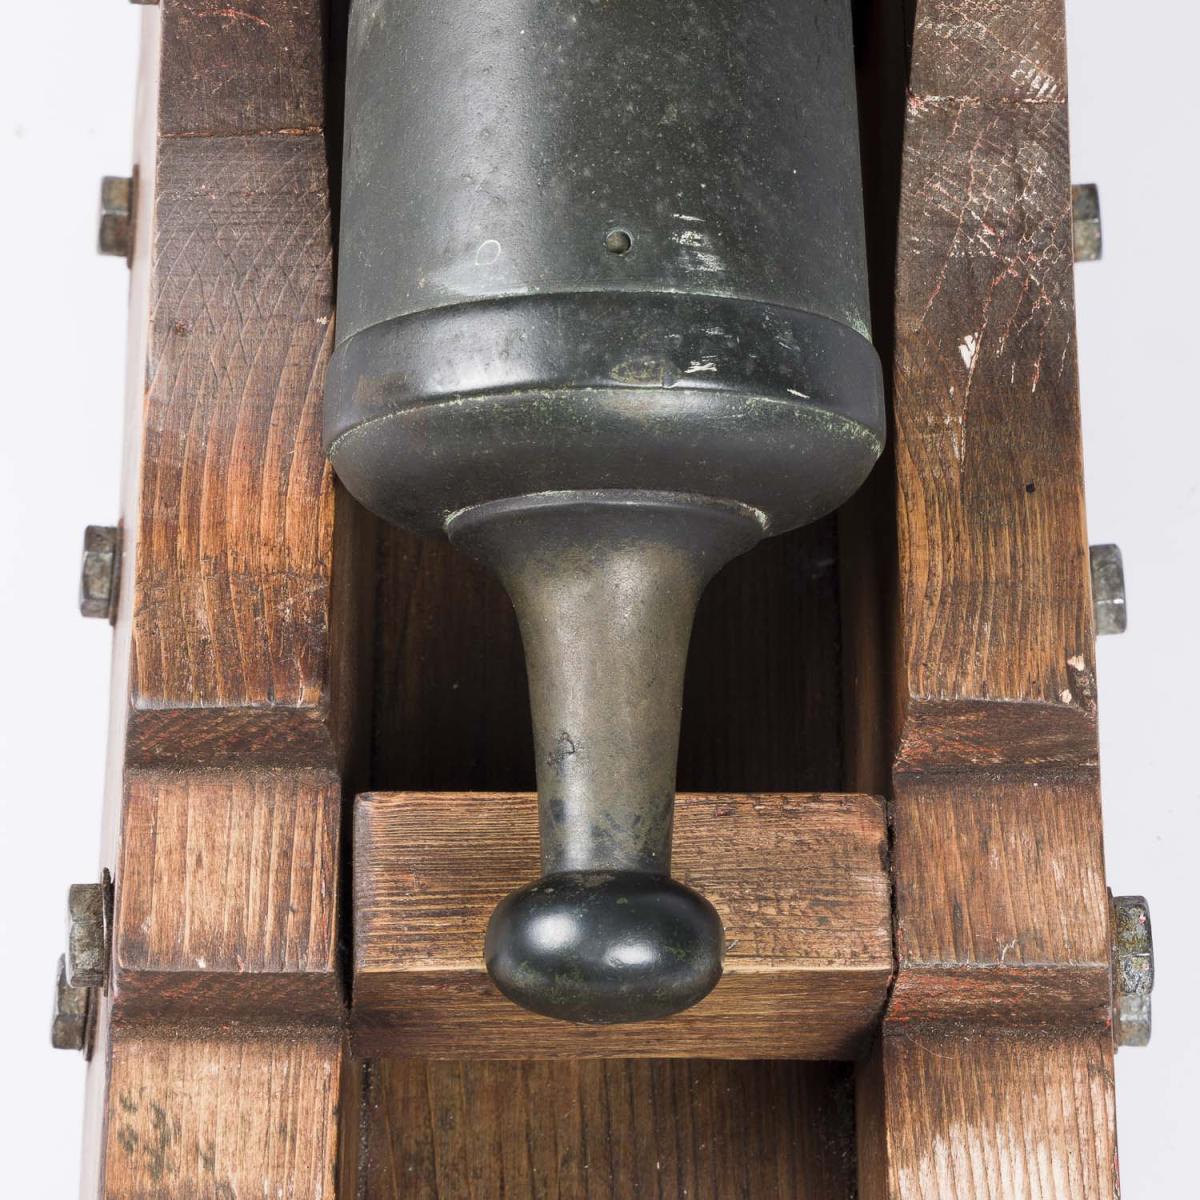 Early 19th century bronze Danish muzzle loaded cannon